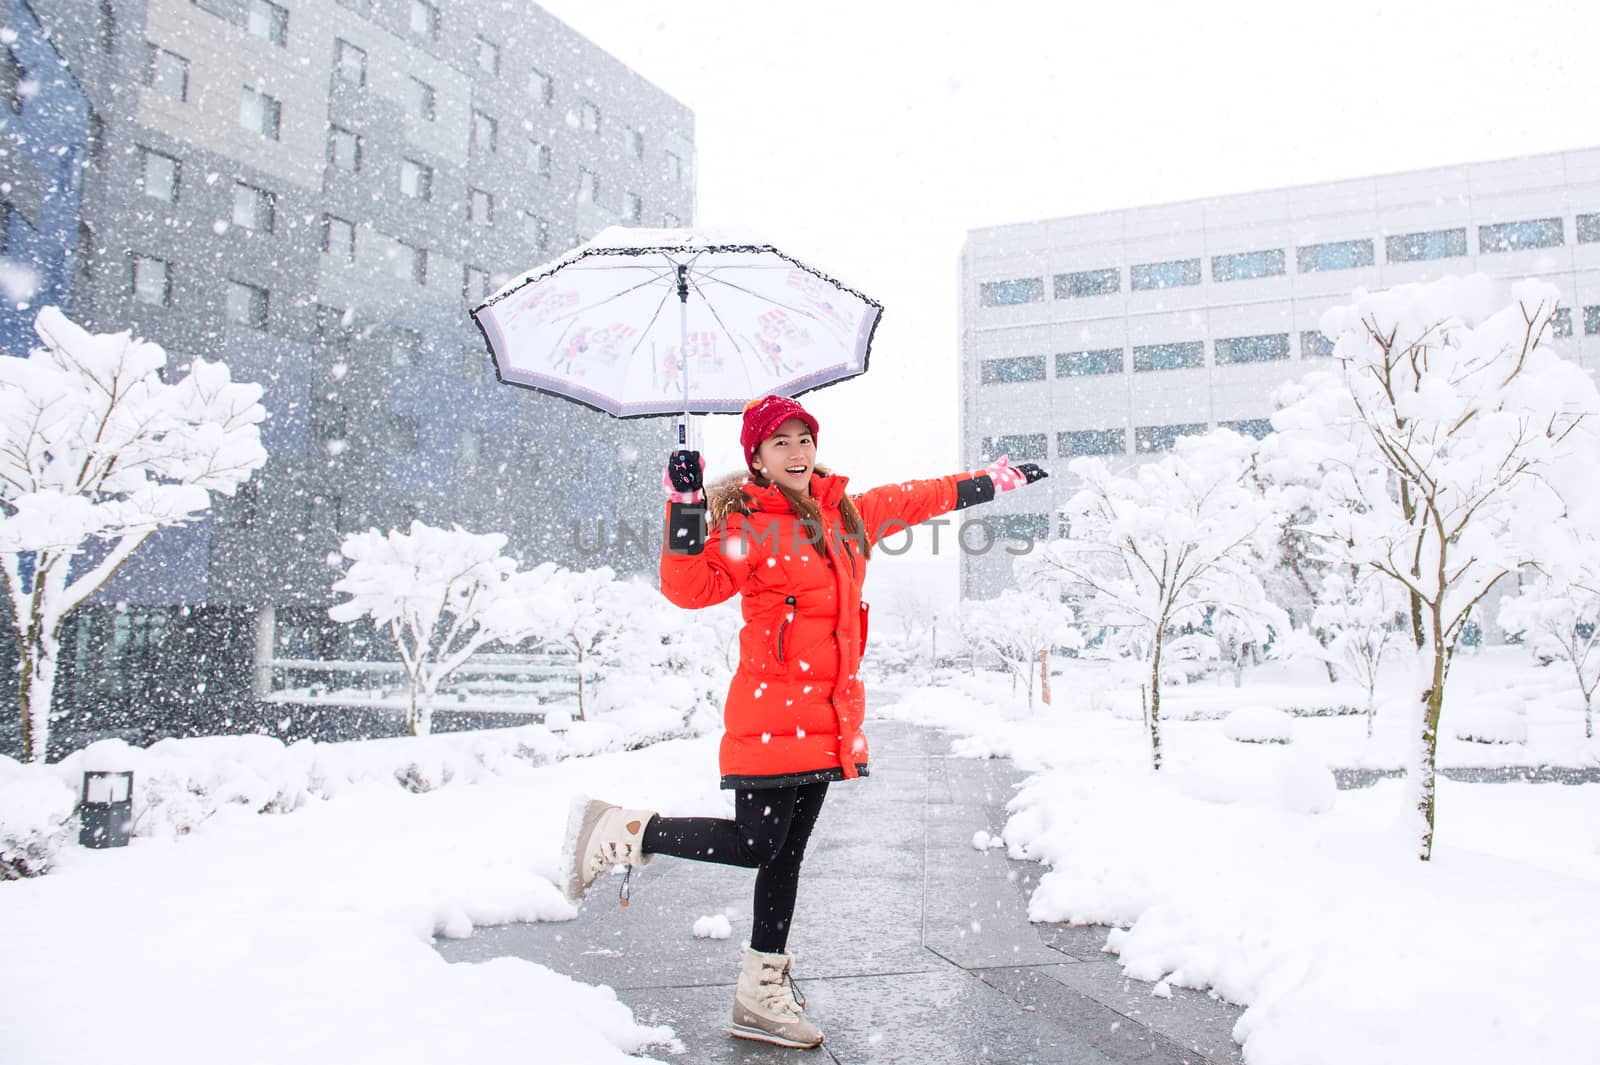 Snow falling on beautiful girl with umbrella in winter.